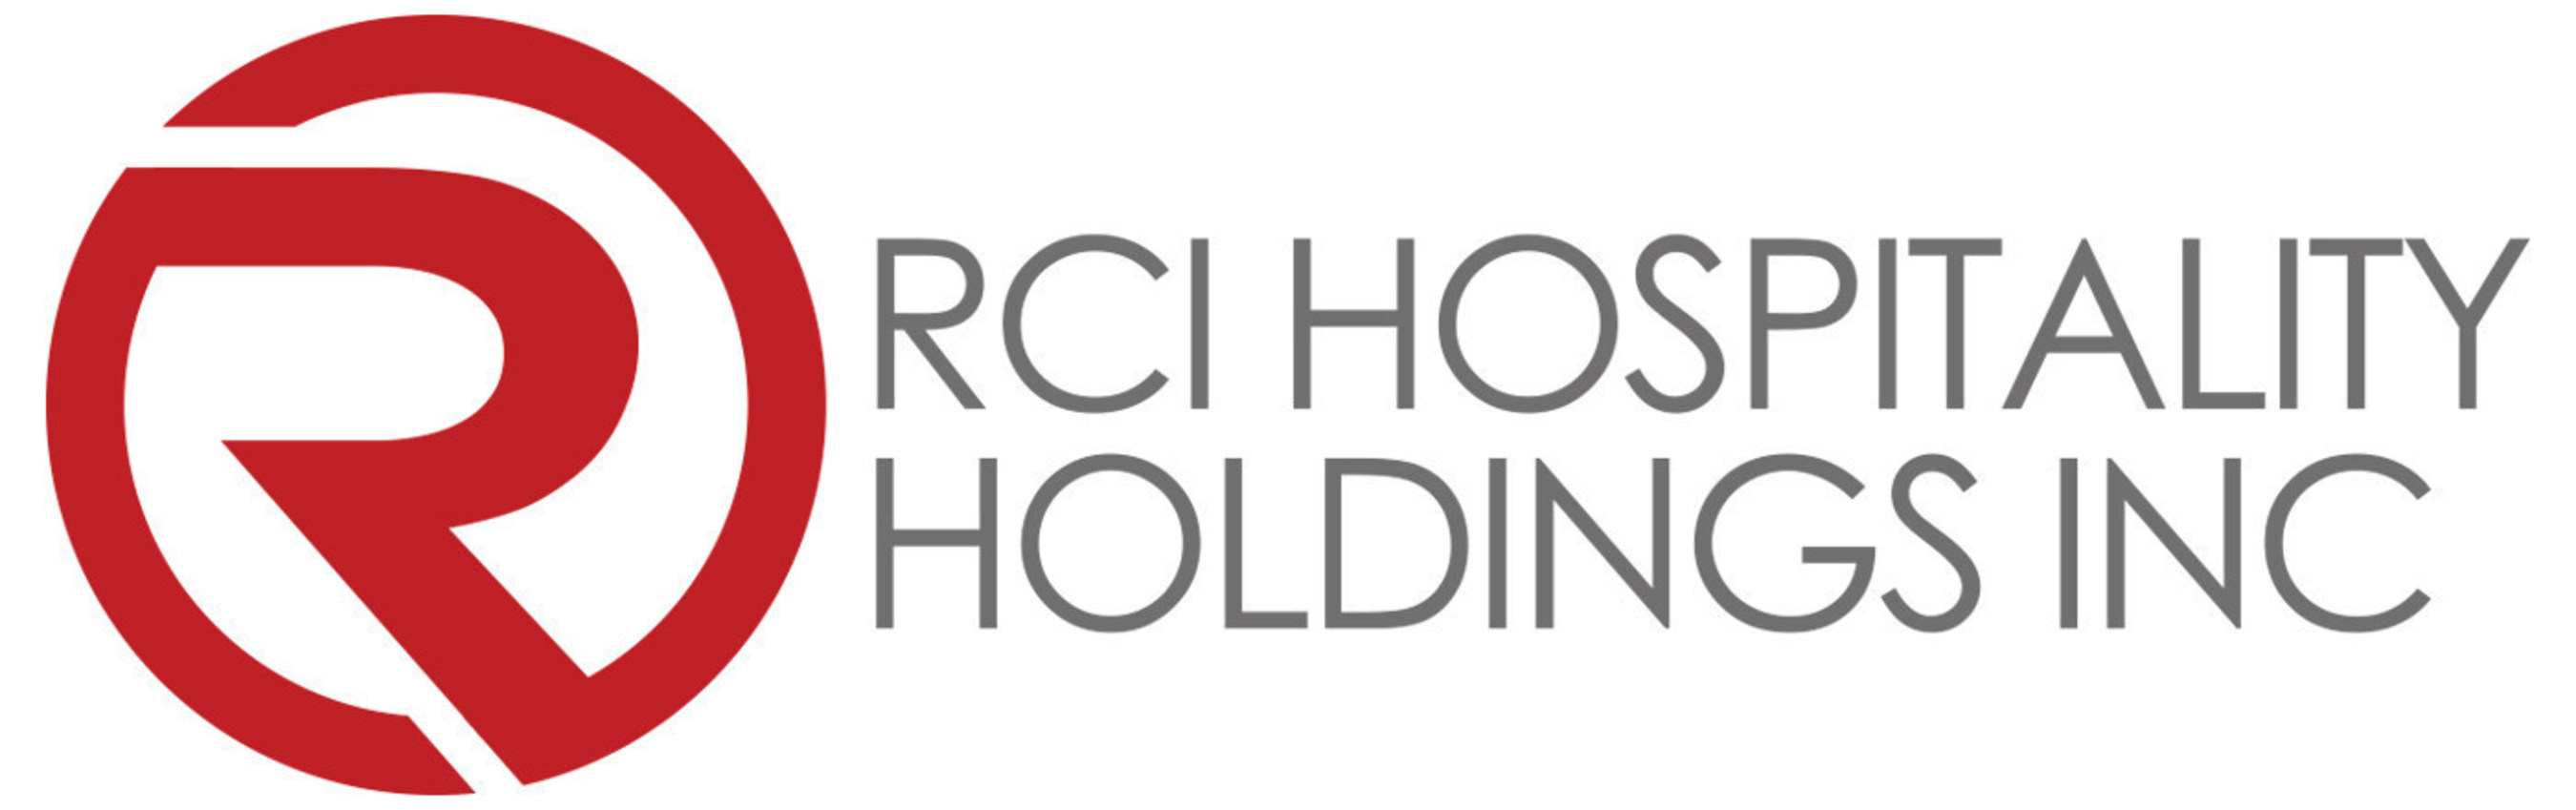 RCI Hospitality Holdings Corporate Logo (PRNewsFoto/RCI Hospitality Holdings, Inc.)